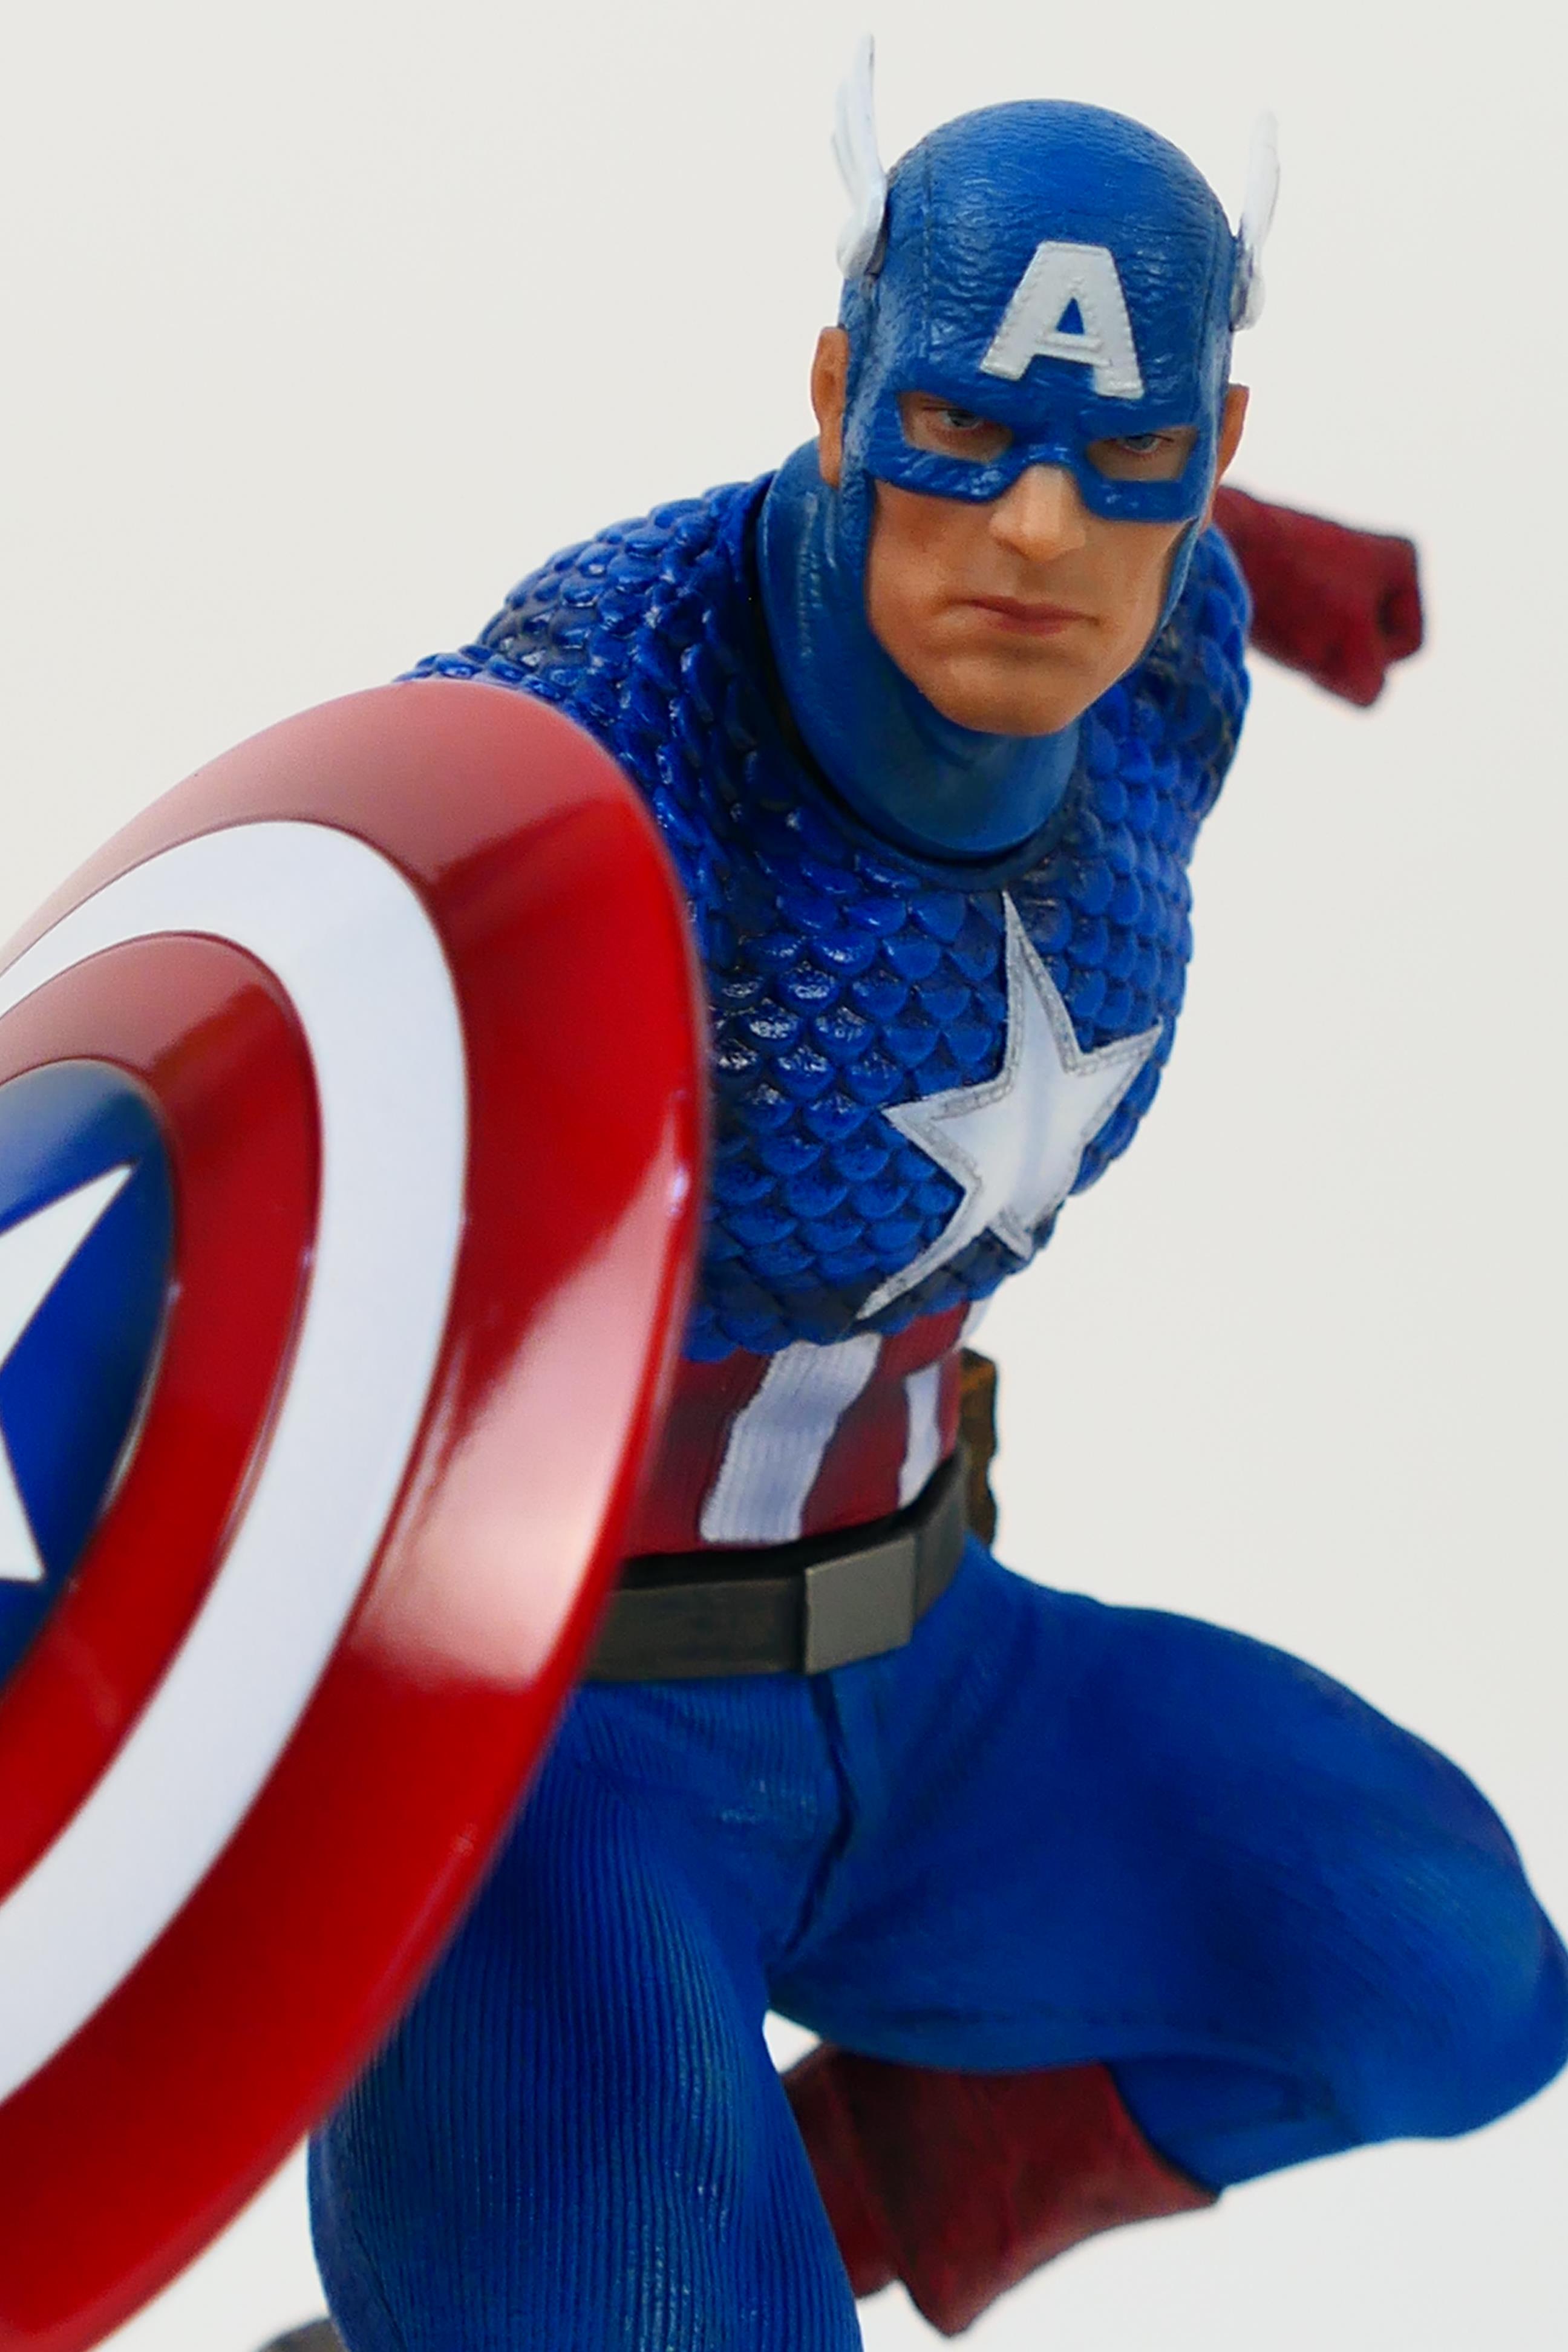 Kotobukiya - Marvel - ARTFX Premier - A limited edition Captain America pre painted model kit - Image 4 of 5